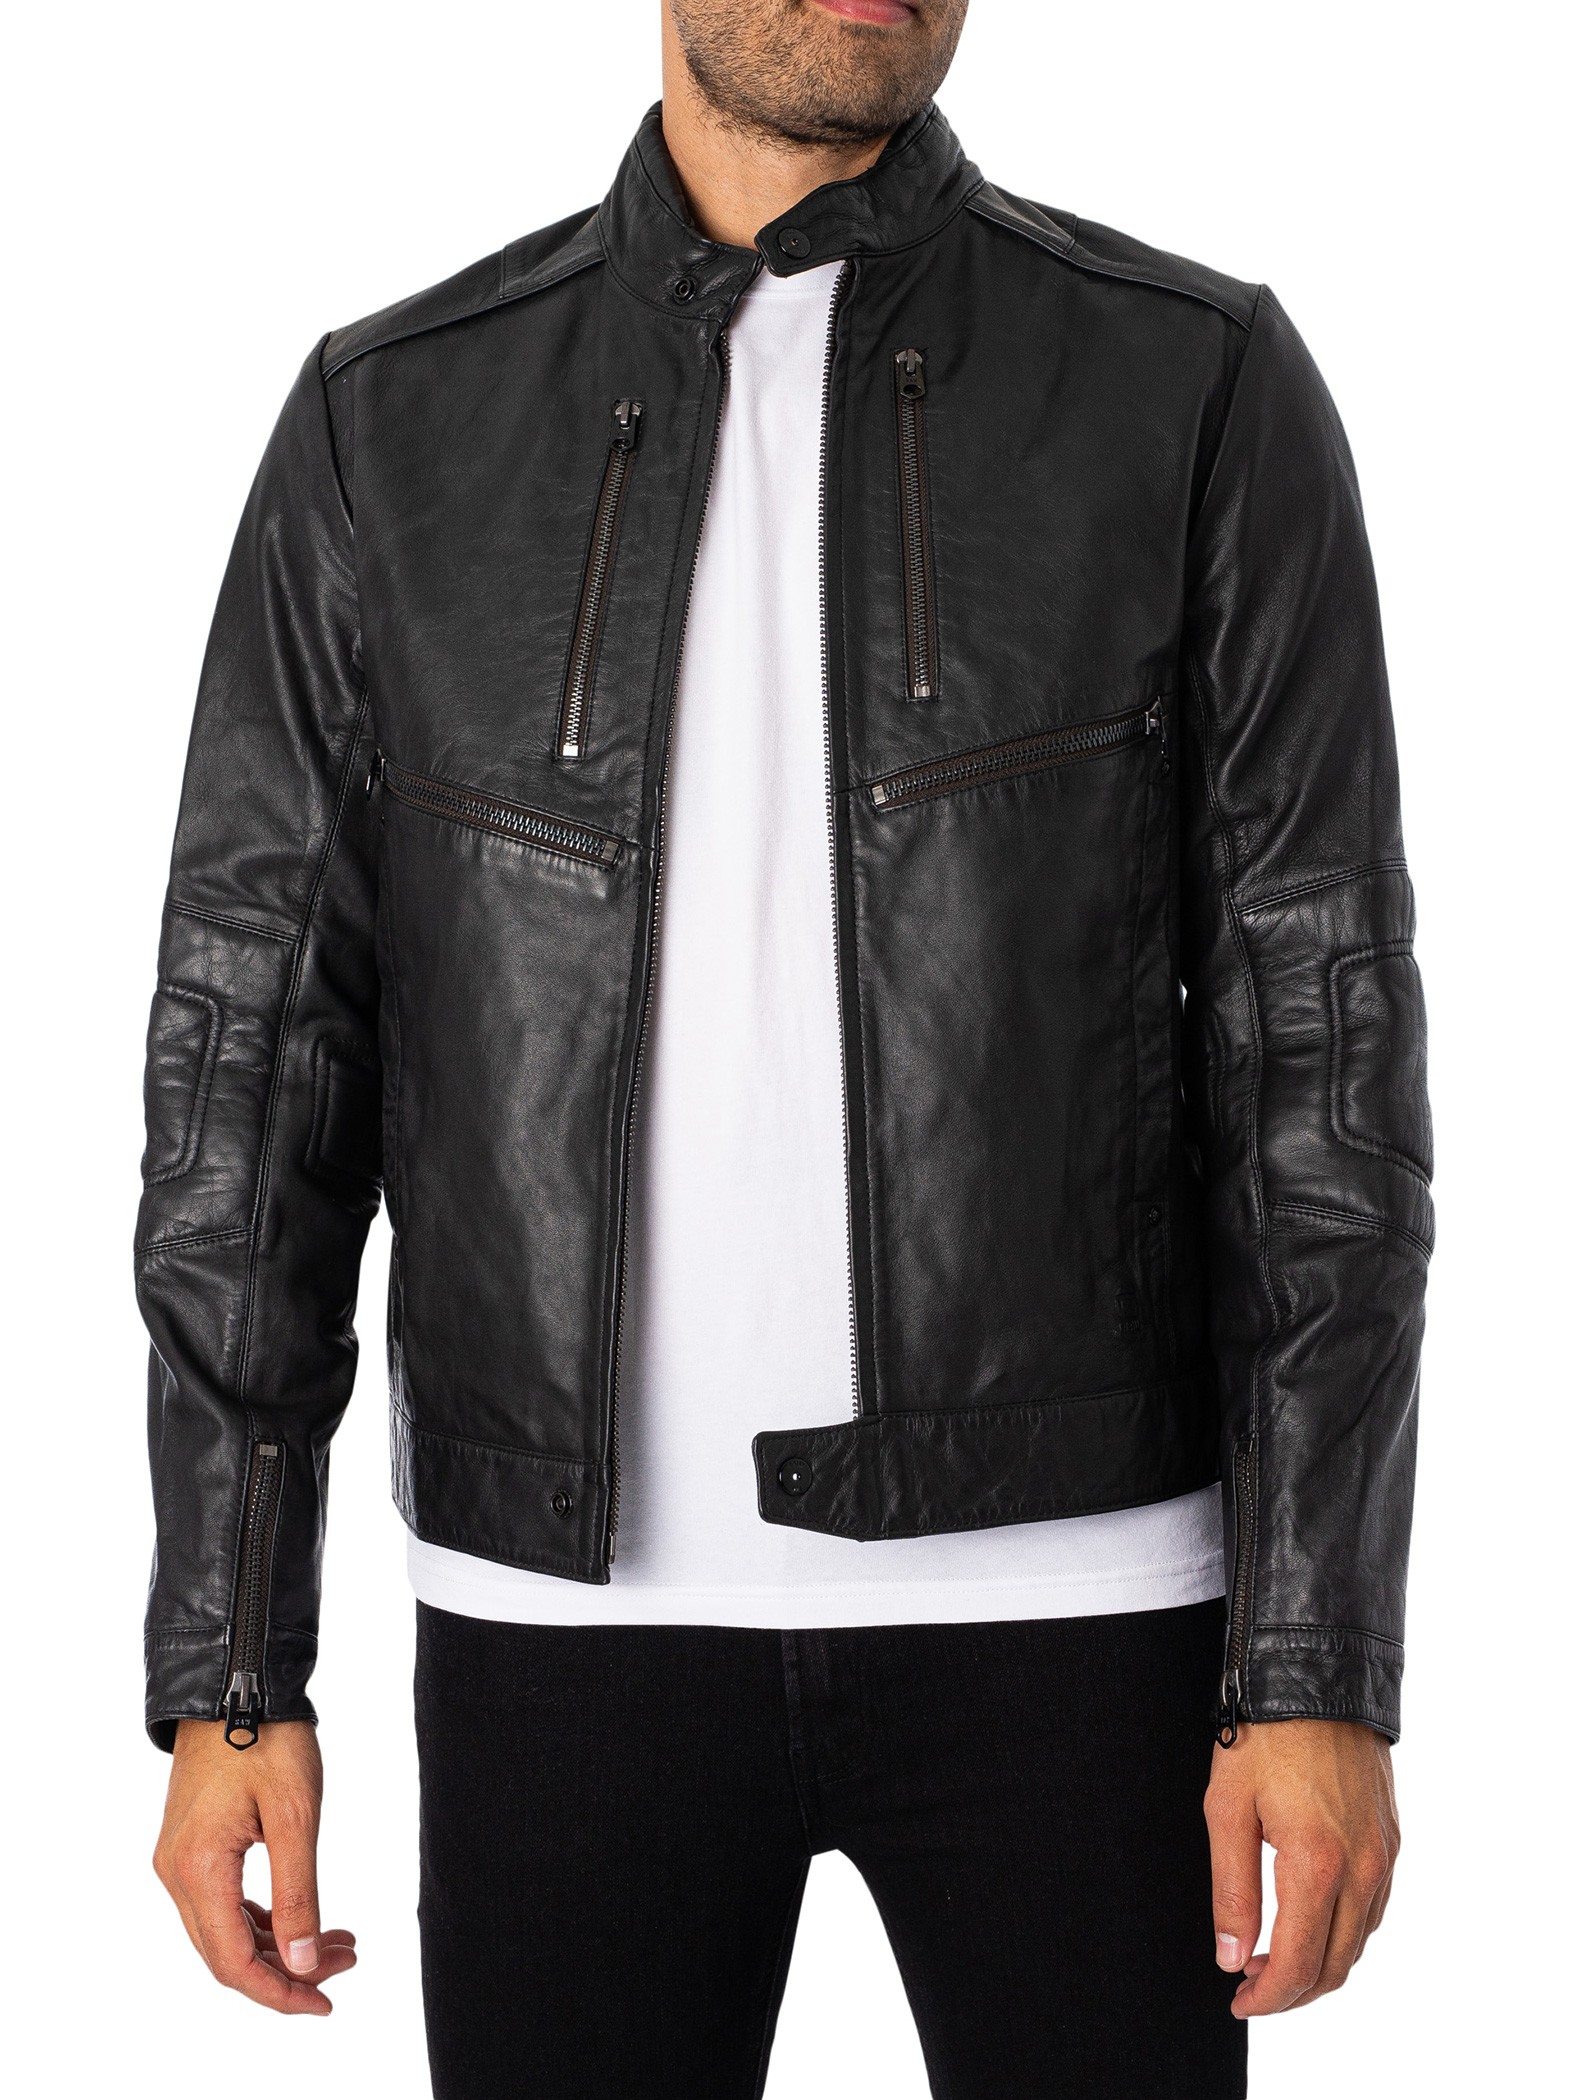 G-Star RAW Biker Leather Jacket - Black | Standout